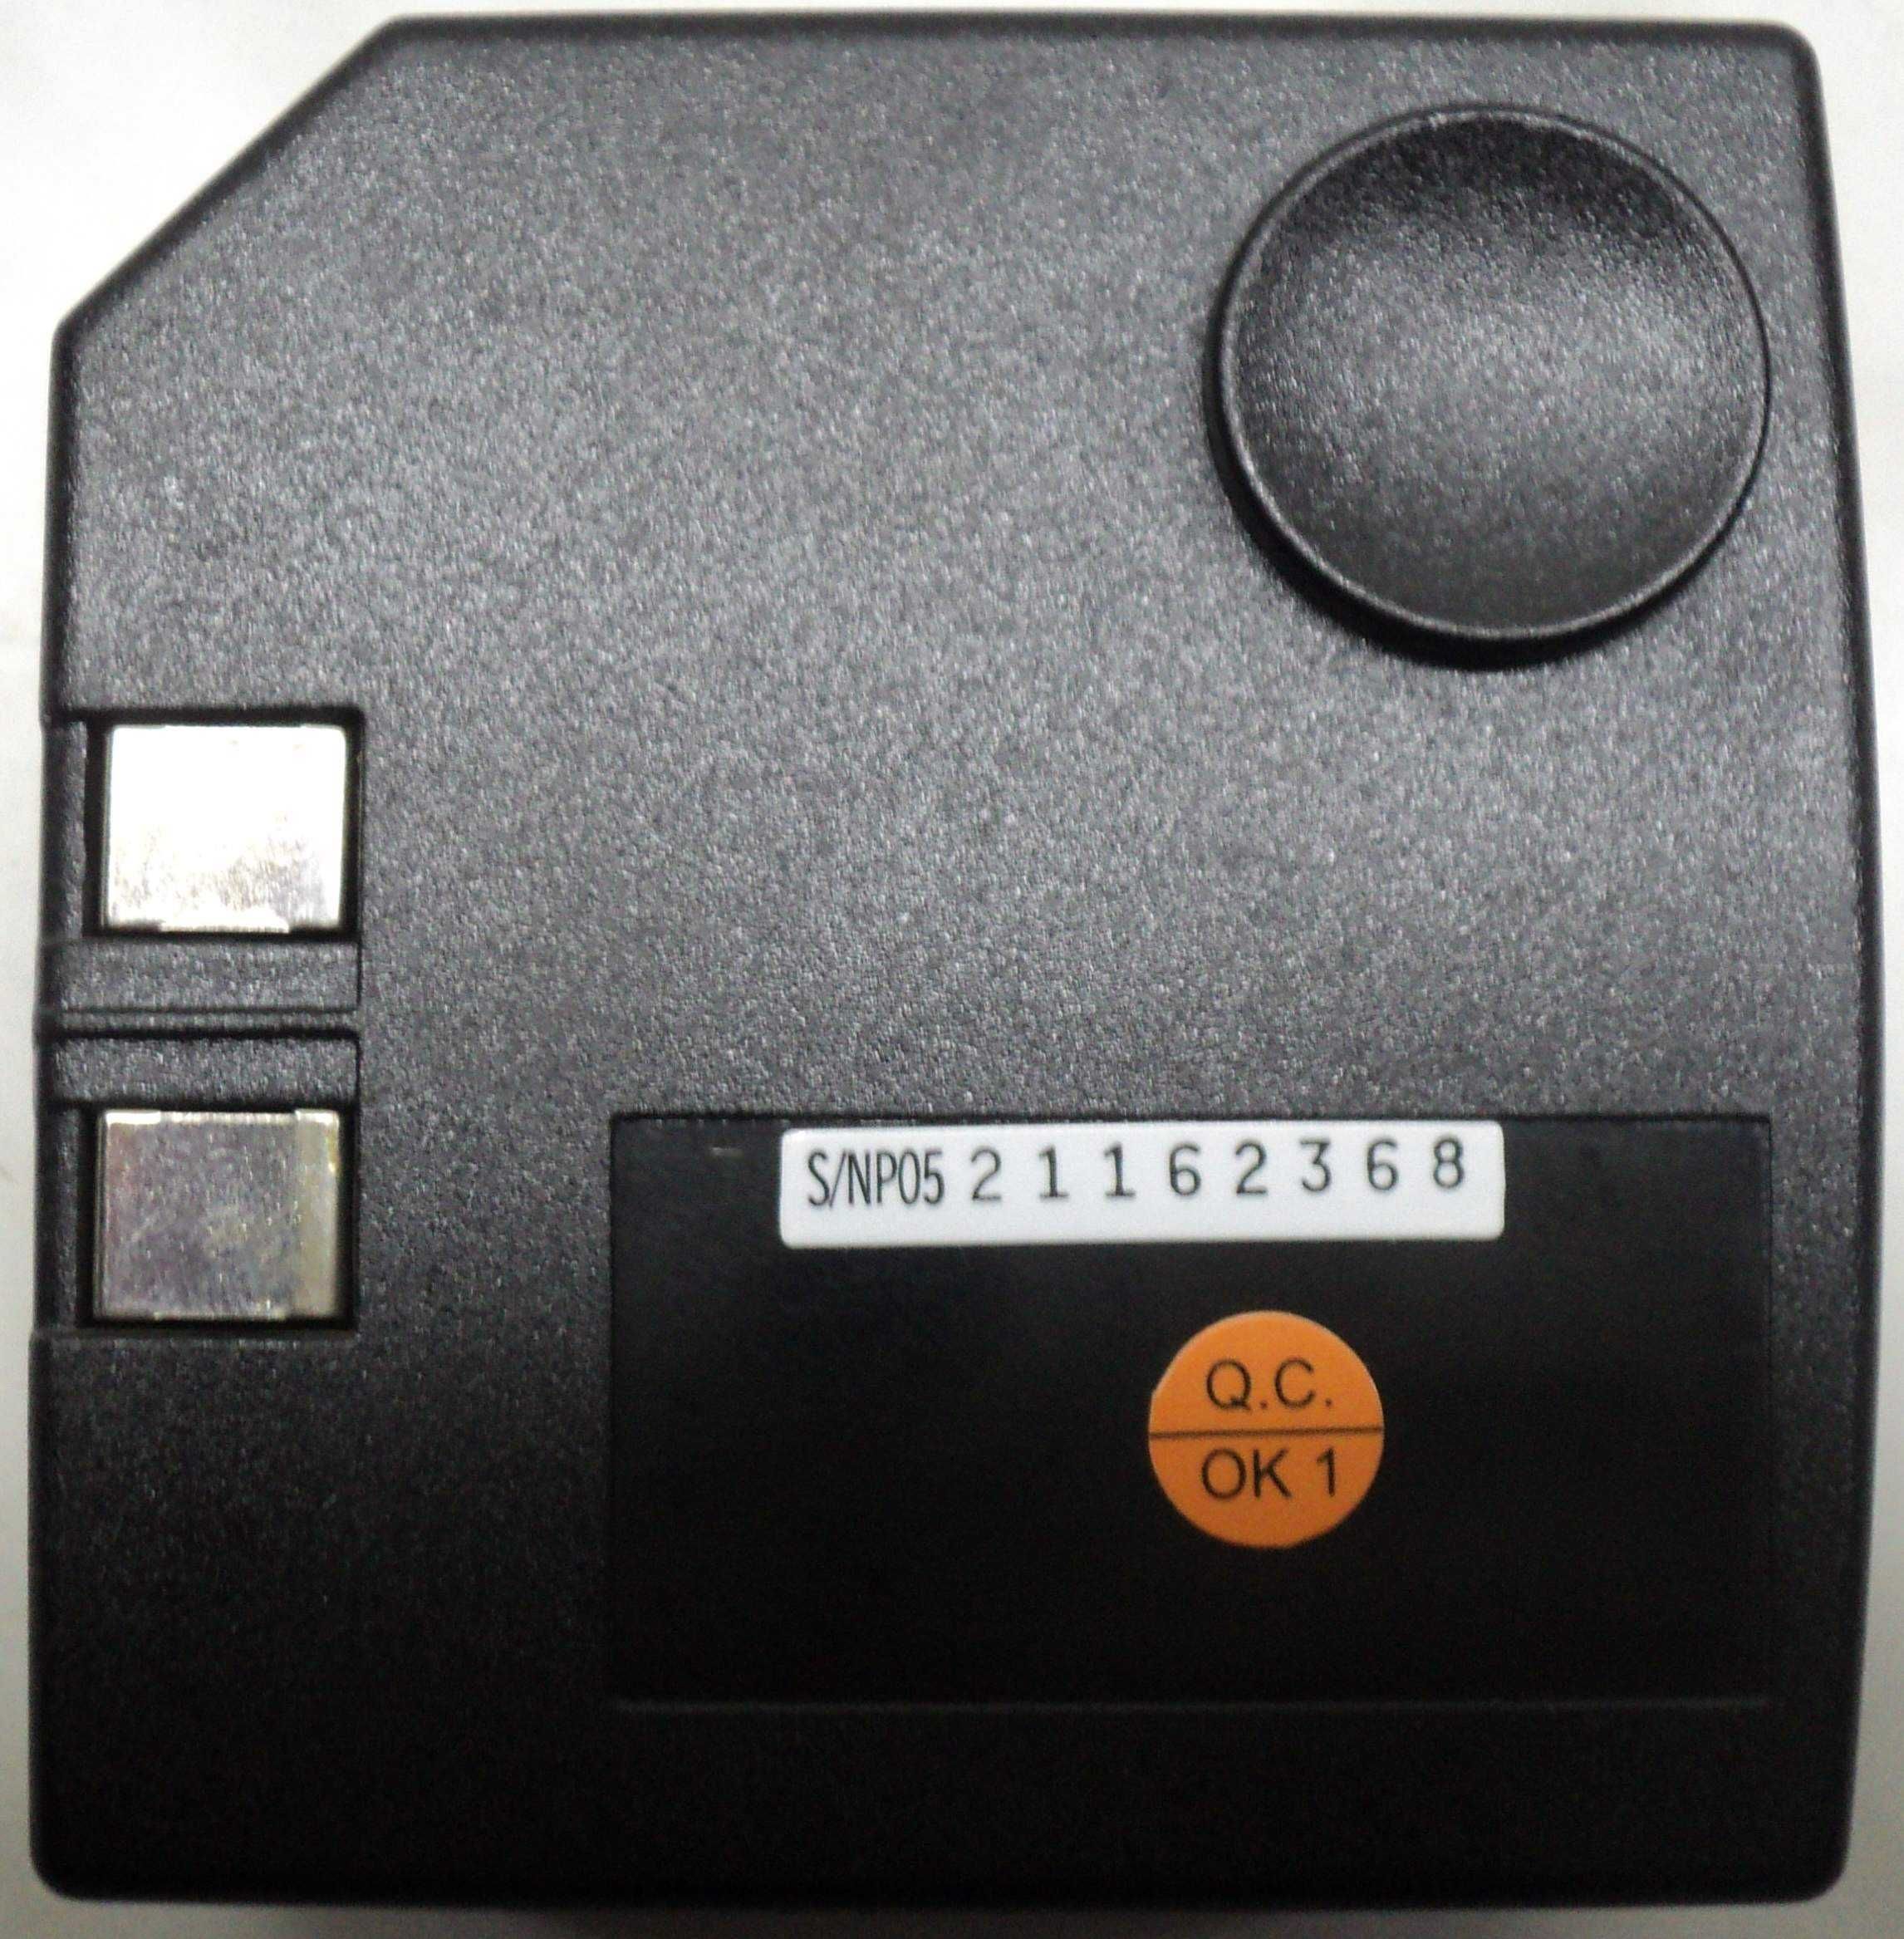 Alimentator Imprimanta Lexmark (cartridge) 30V 0.4 A